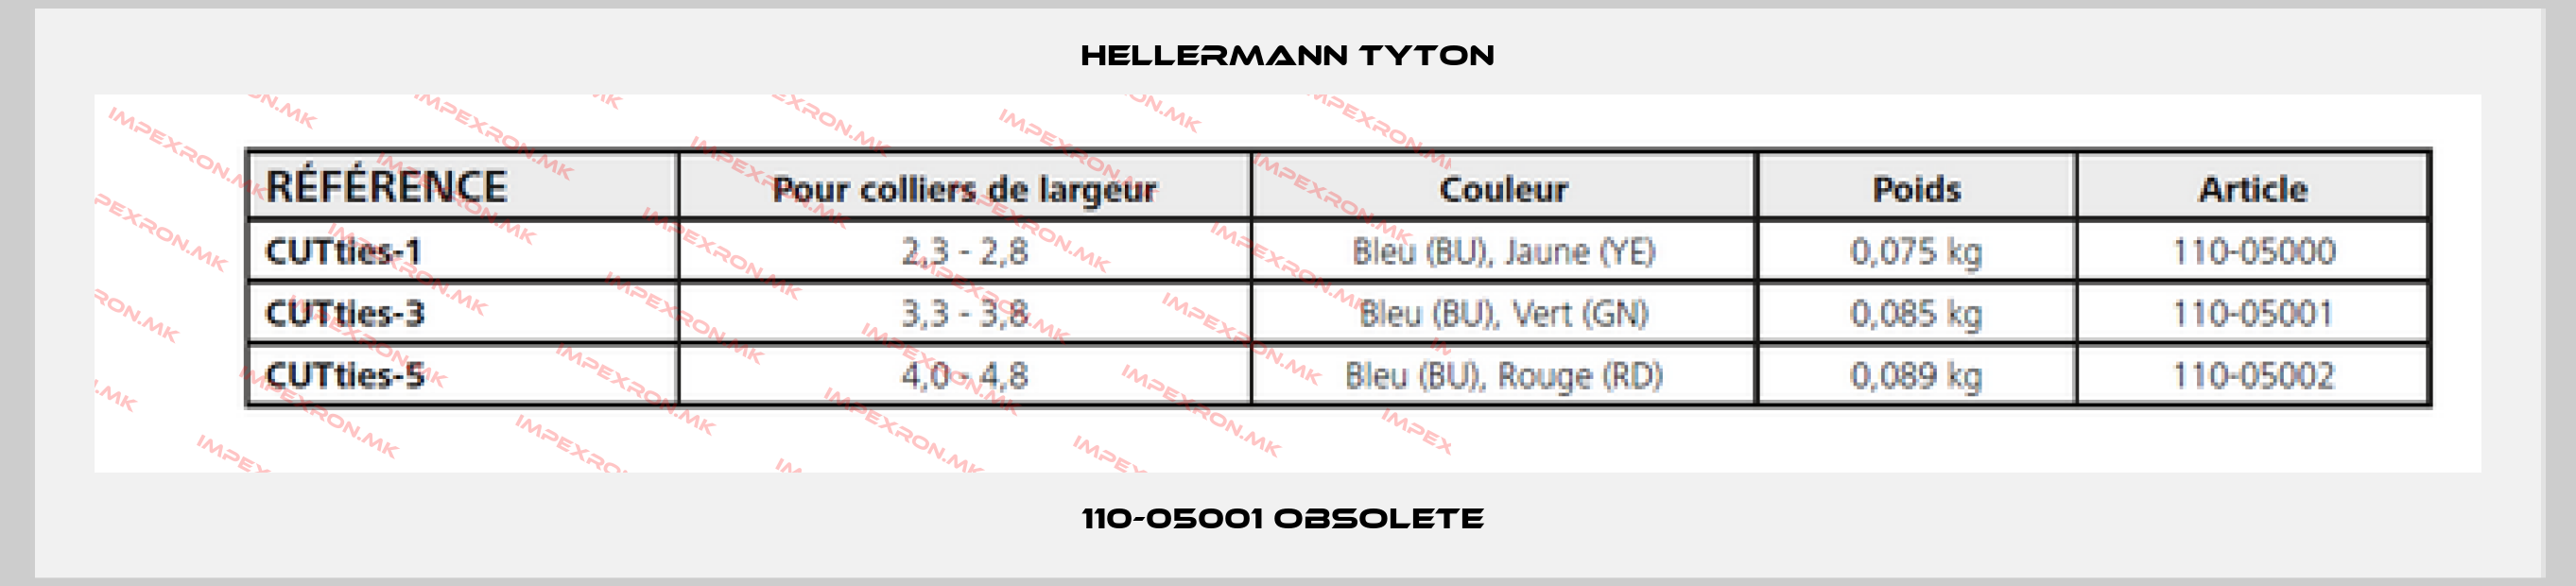 Hellermann Tyton-110-05001 obsolete price